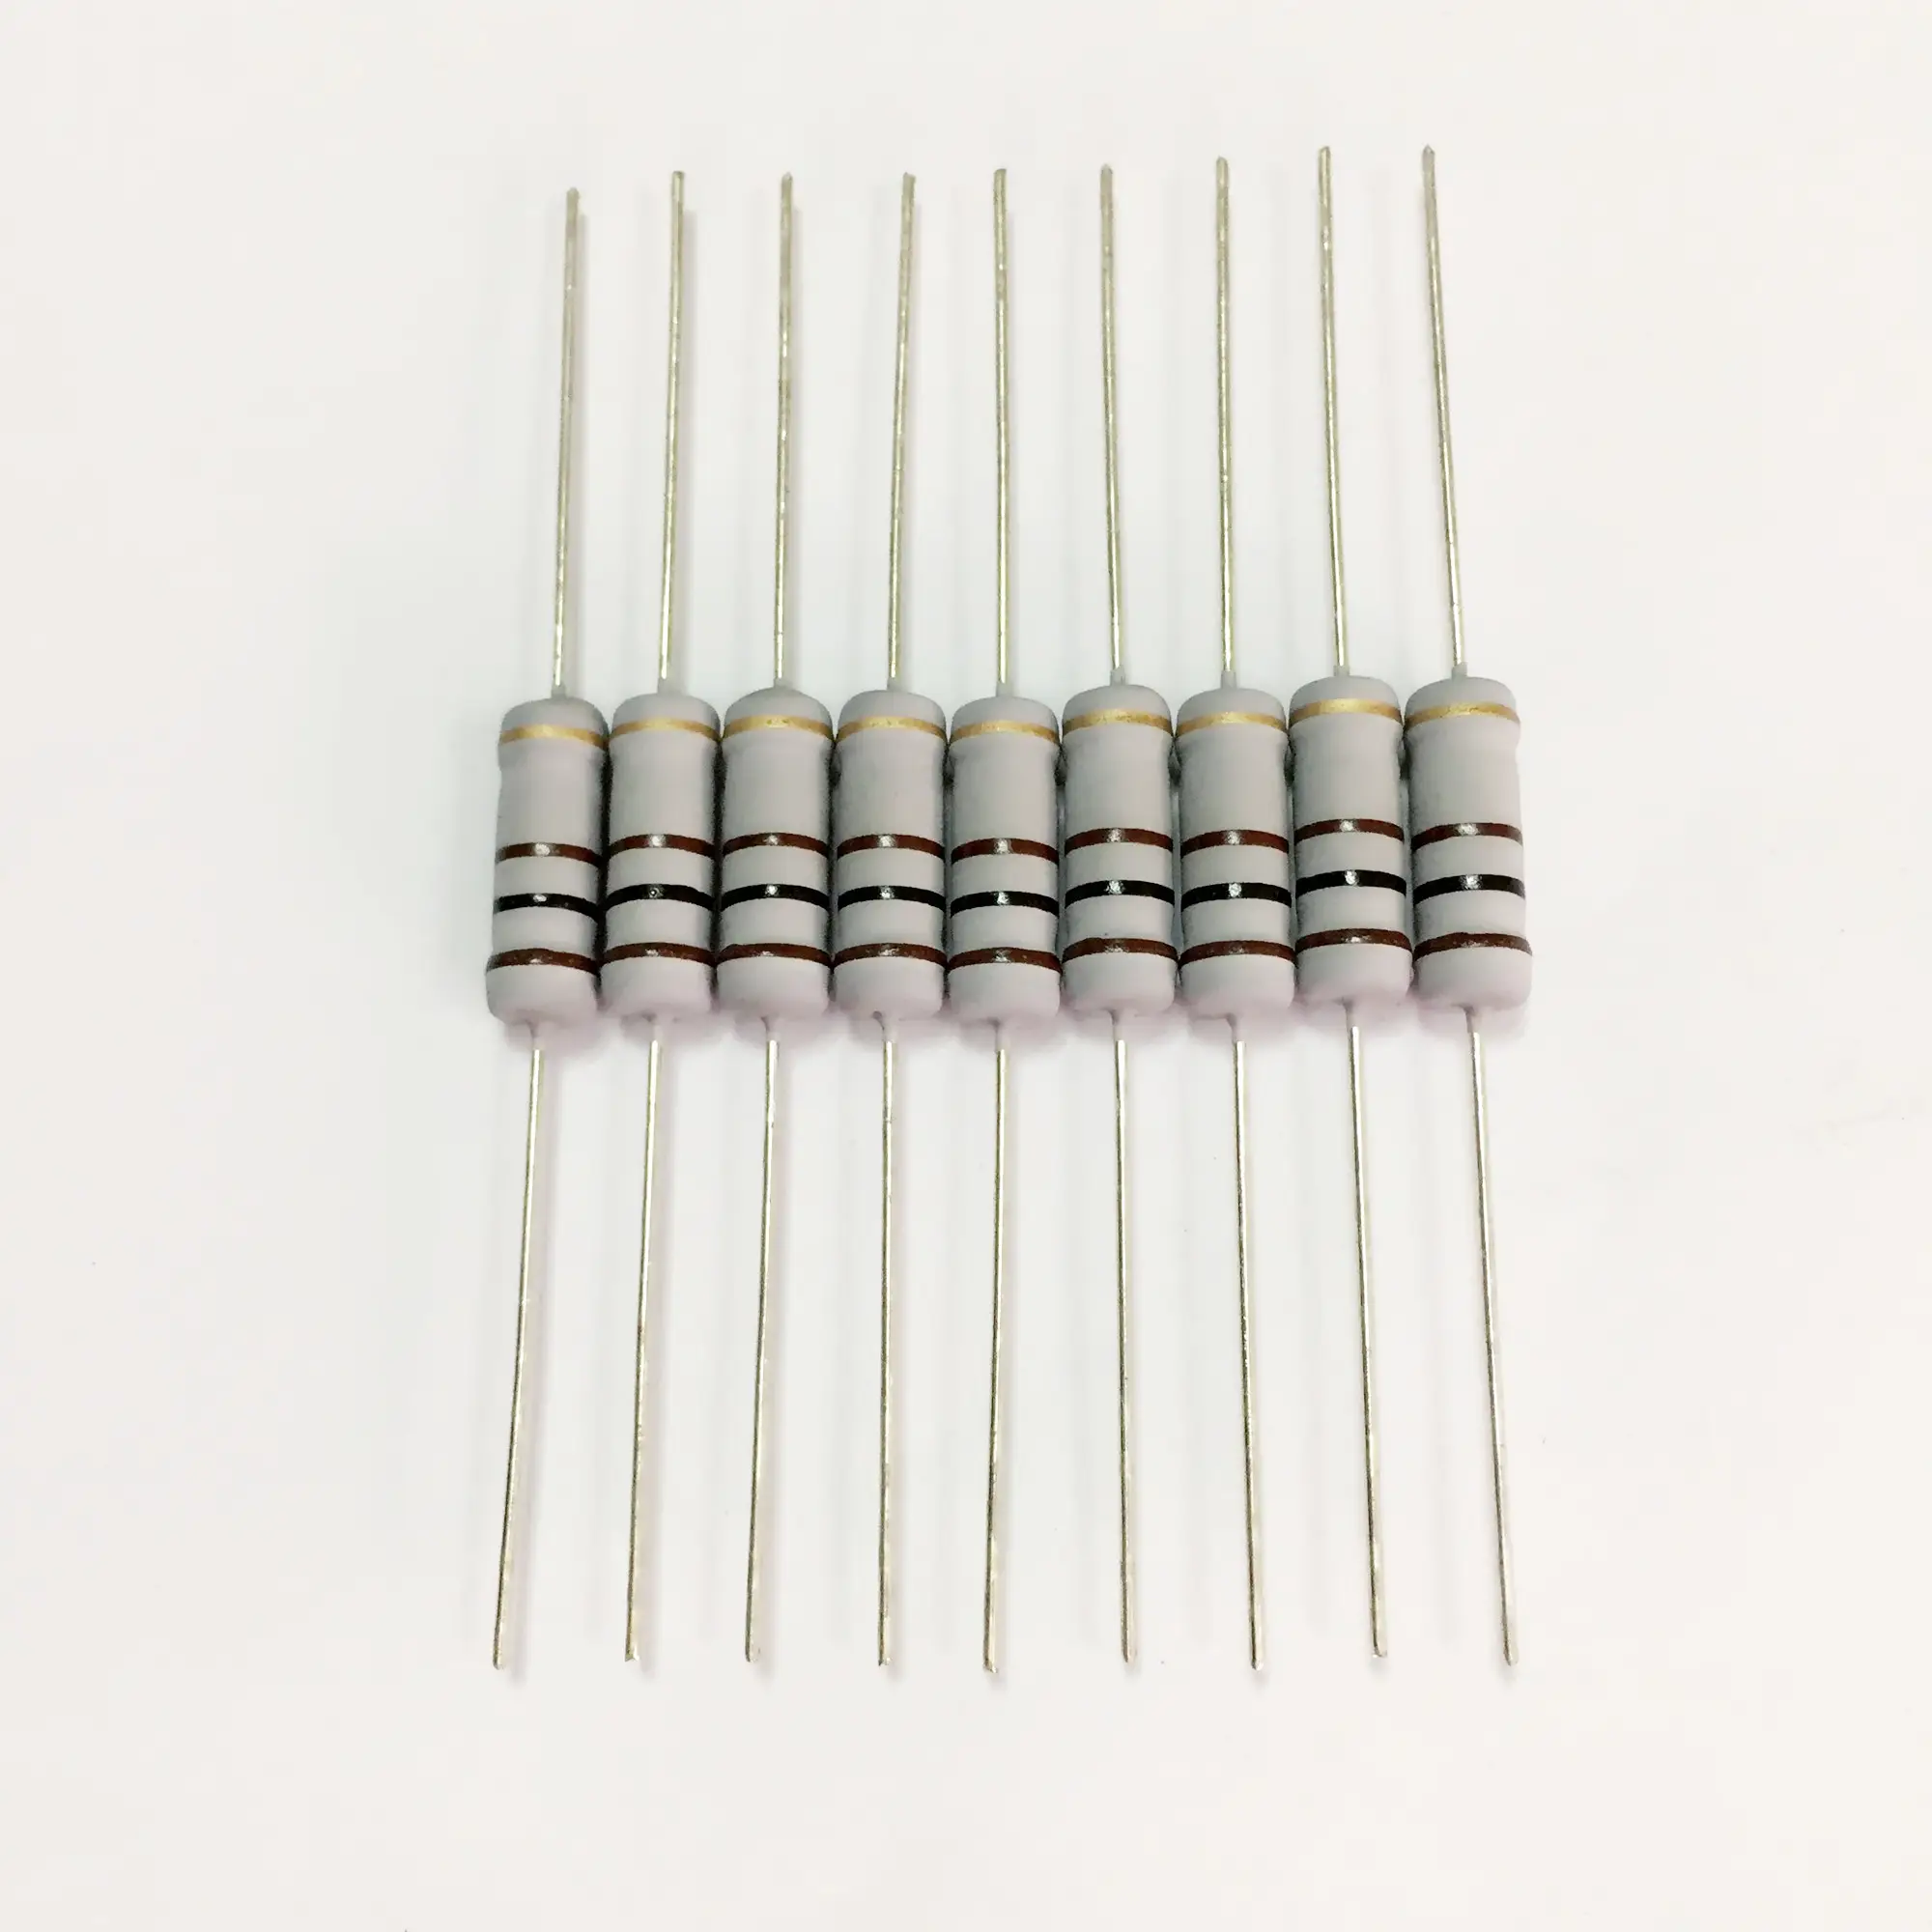 Savol Metalloxid-Film widerstand Elektronische Komponente Großhandel Bulk Sale Resistor